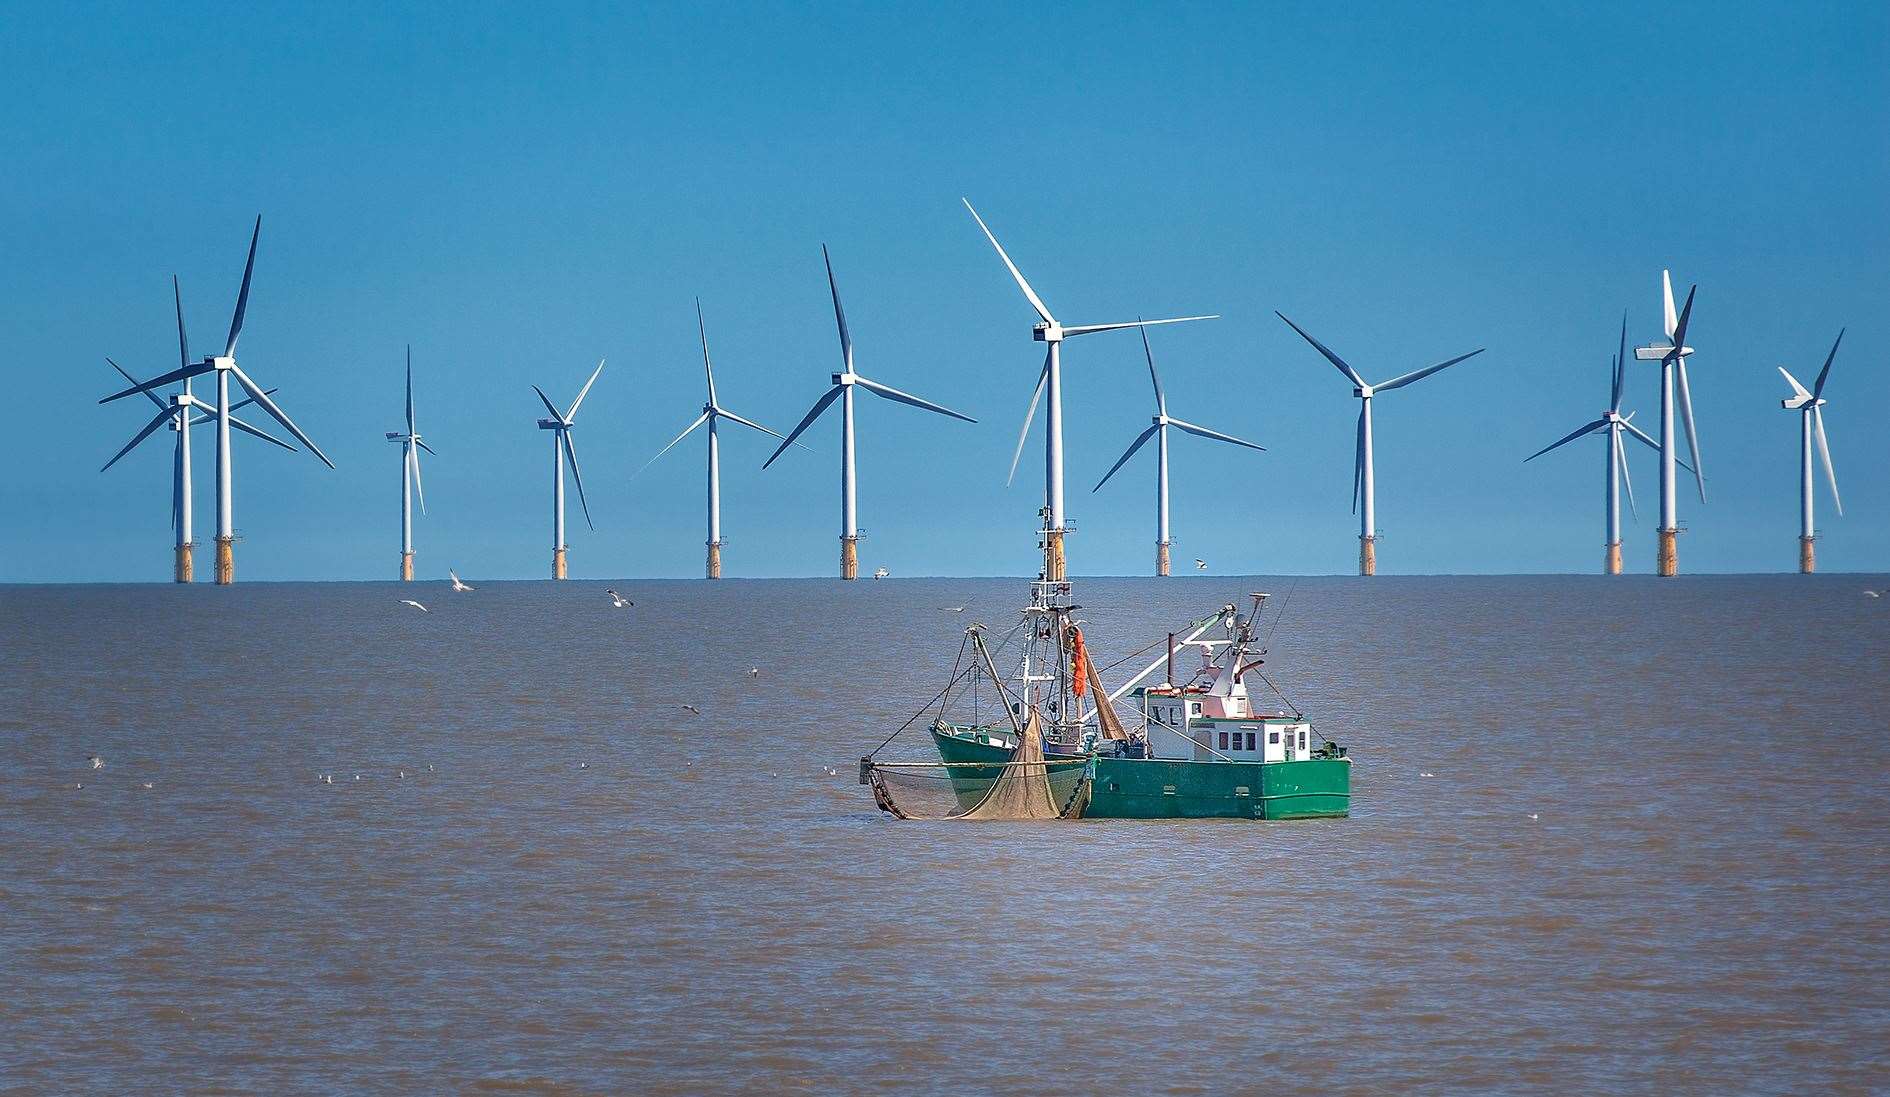 Off shire wind turbine and fishing boat